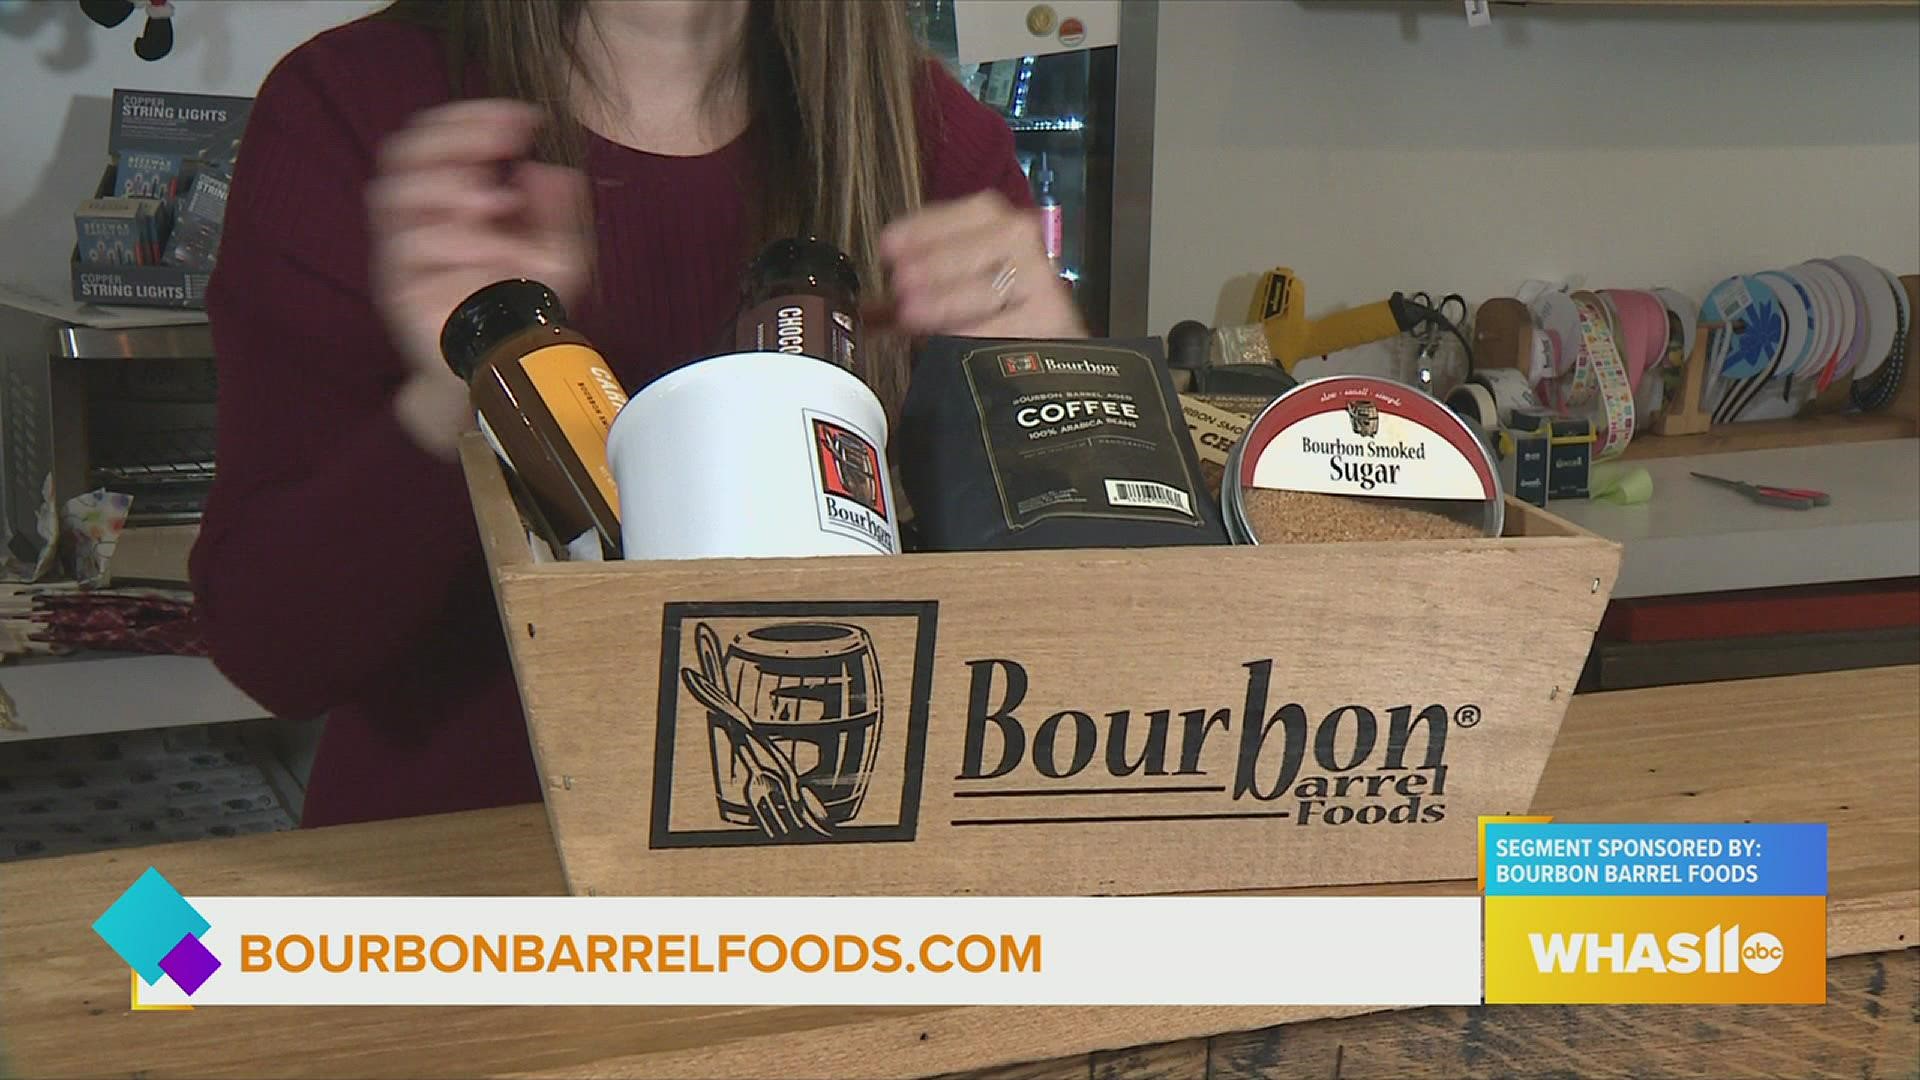 To learn more about Bourbon Barrel Foods, visit bourbonbarrelfoods.com.